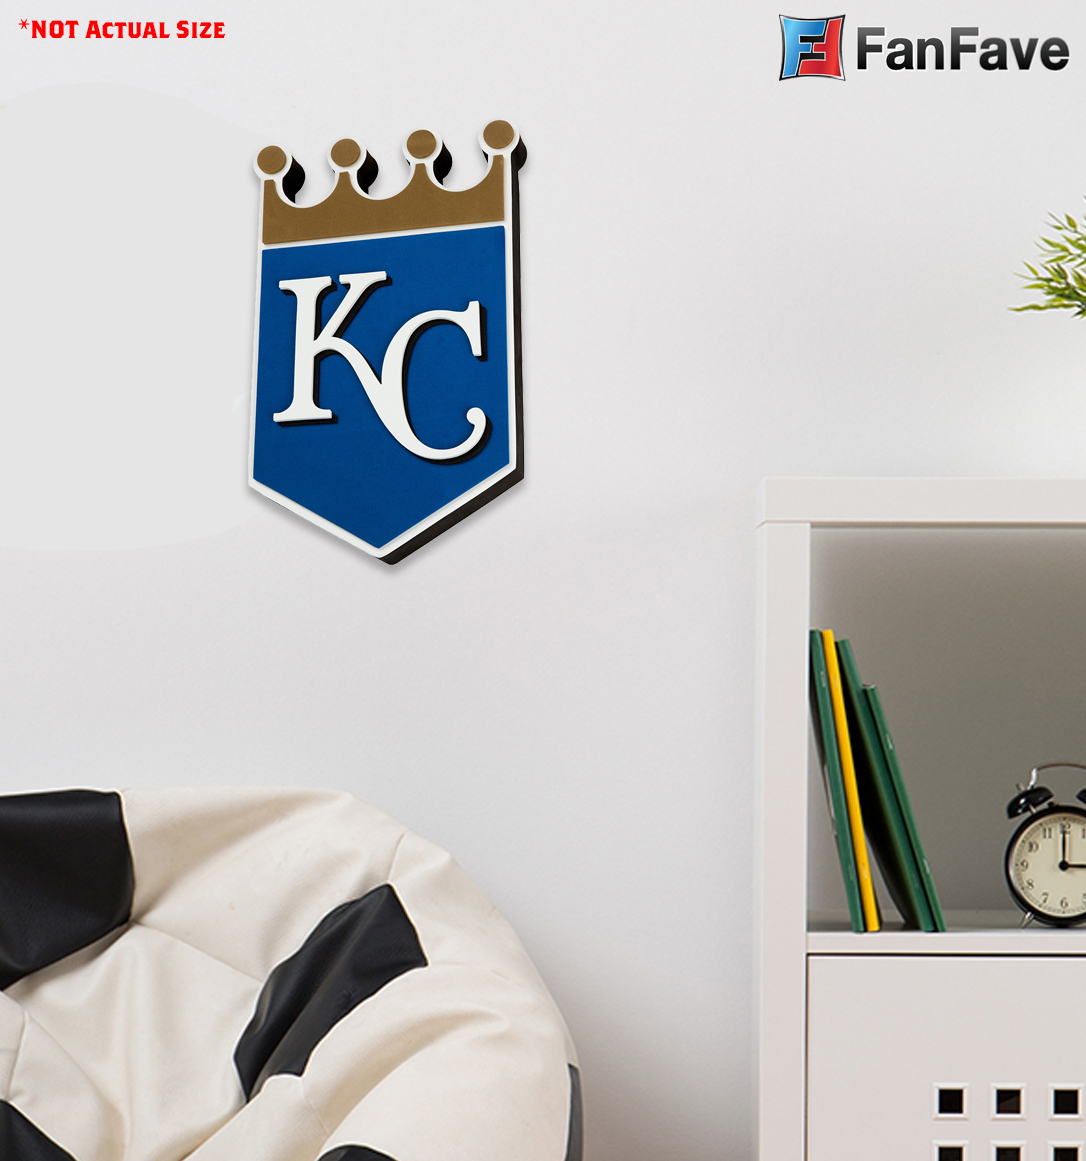 405 Kansas City Royals Images, Stock Photos, 3D objects, & Vectors